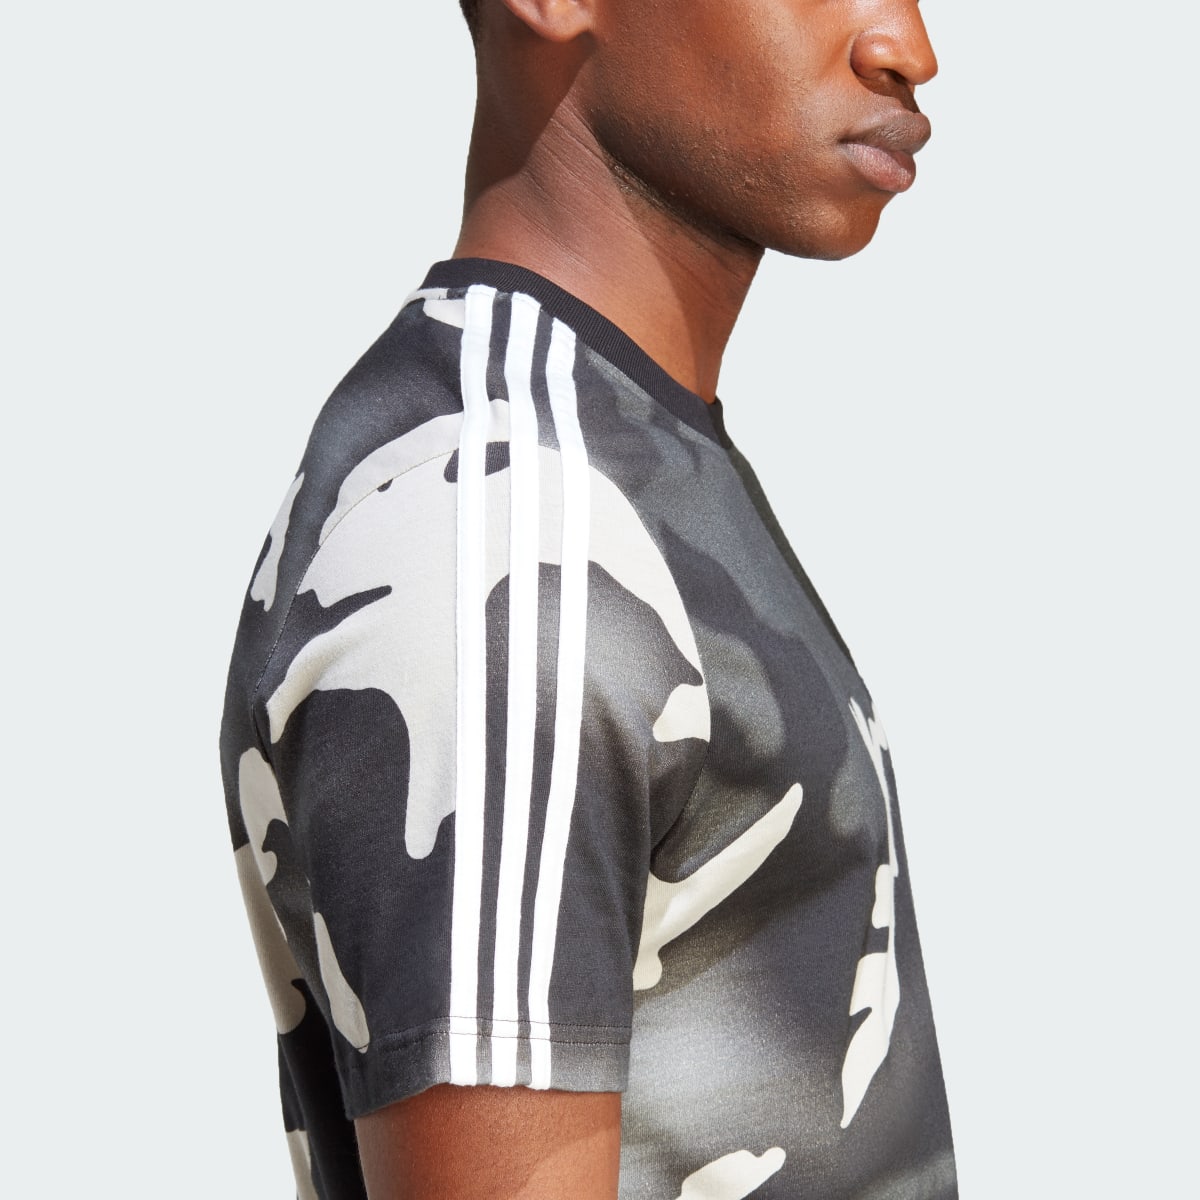 Adidas Camiseta Graphics Camo Allover Print. 7